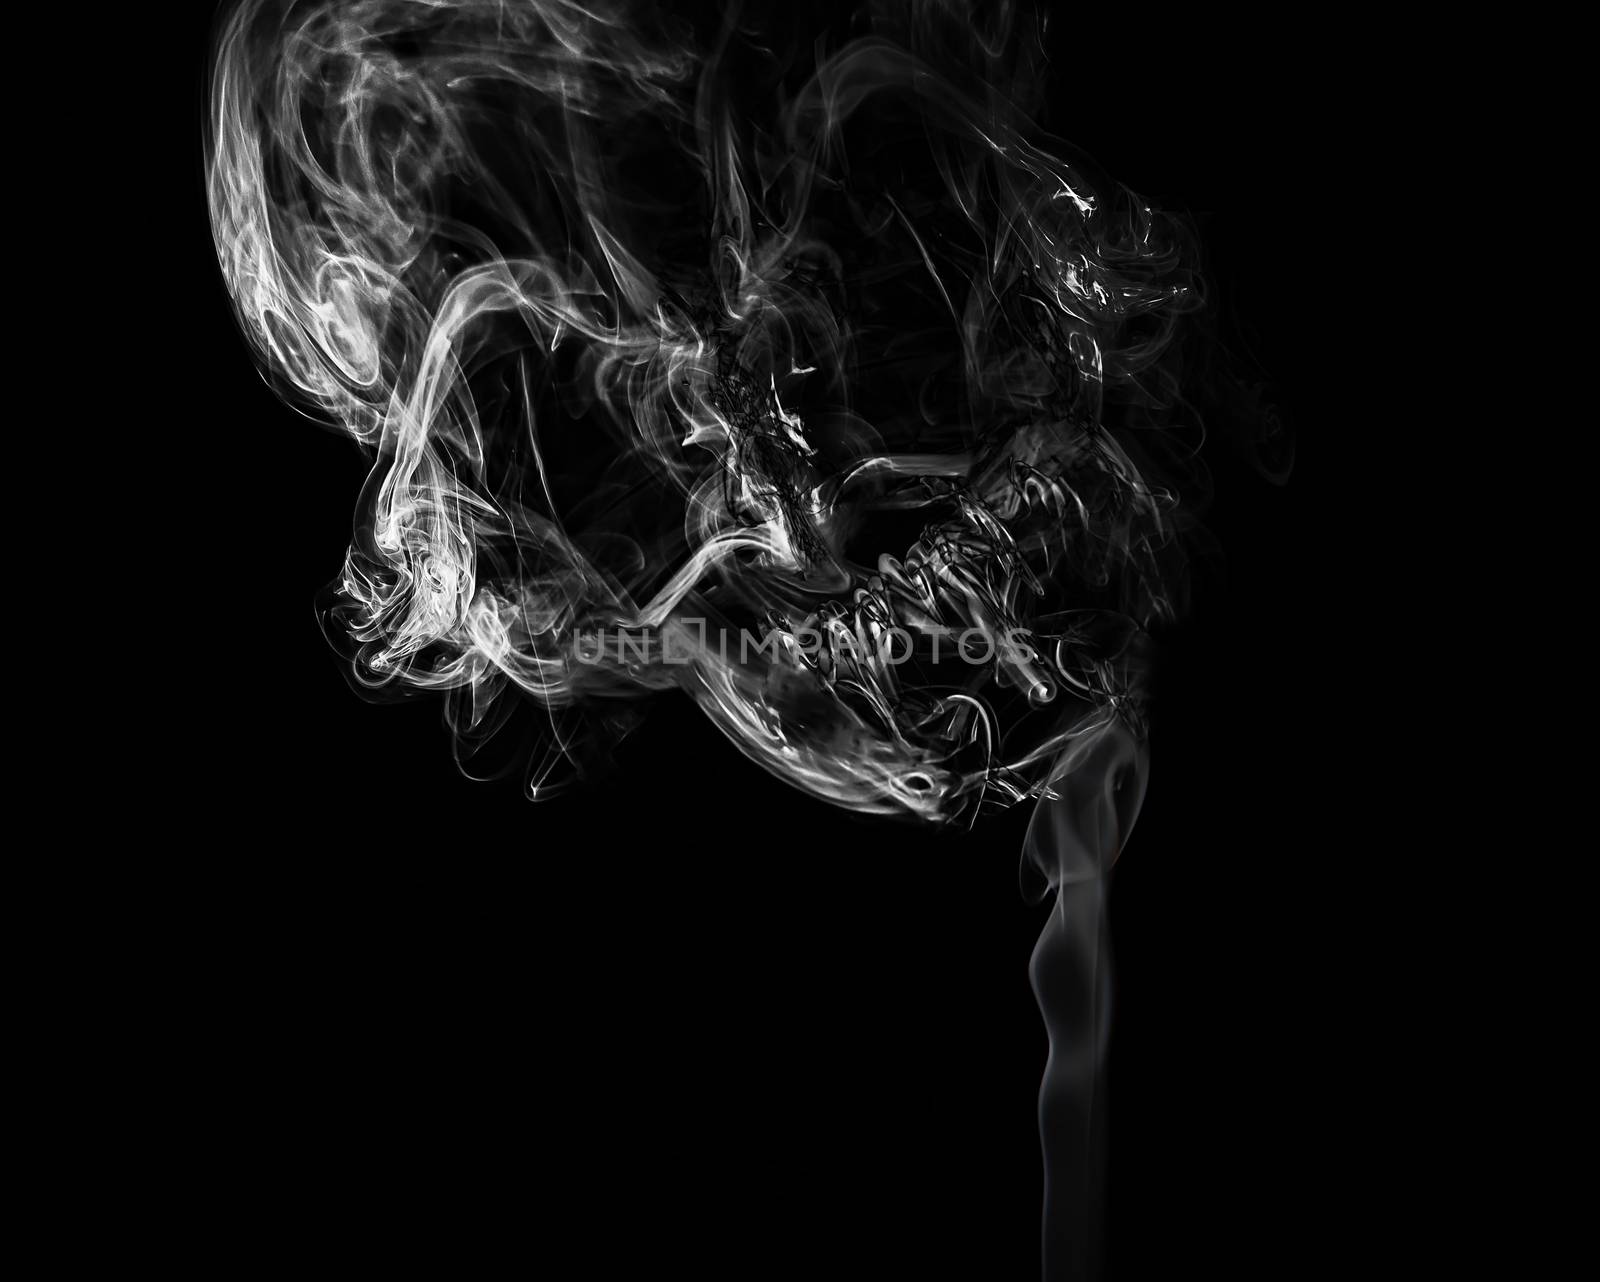 Cigarette smoke forming a skull shape. Black background.